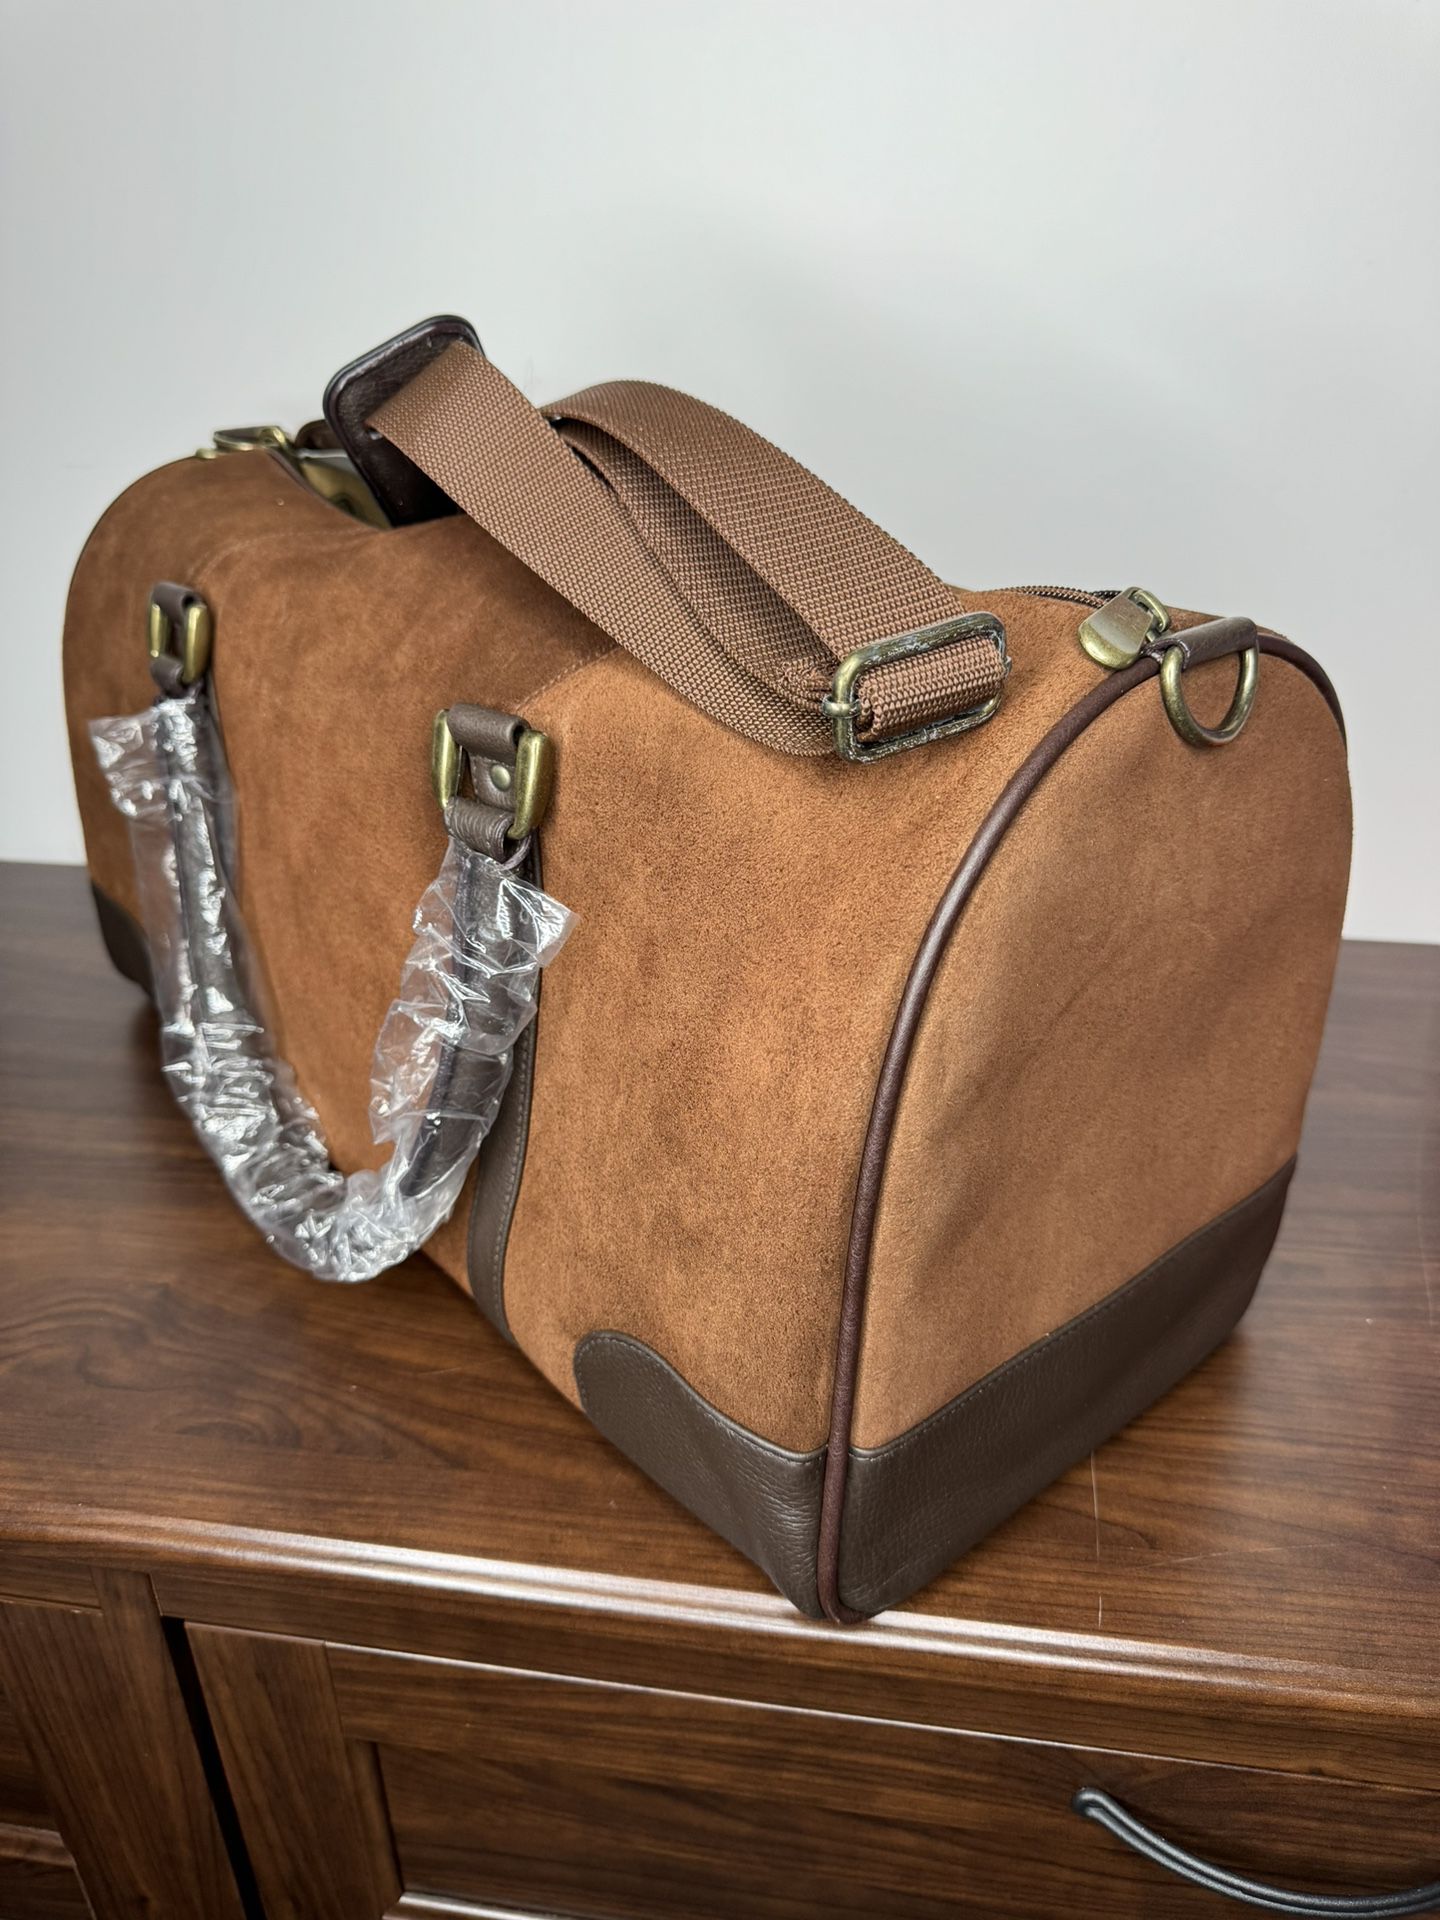 Marlboro Duffle Bag Leather $100